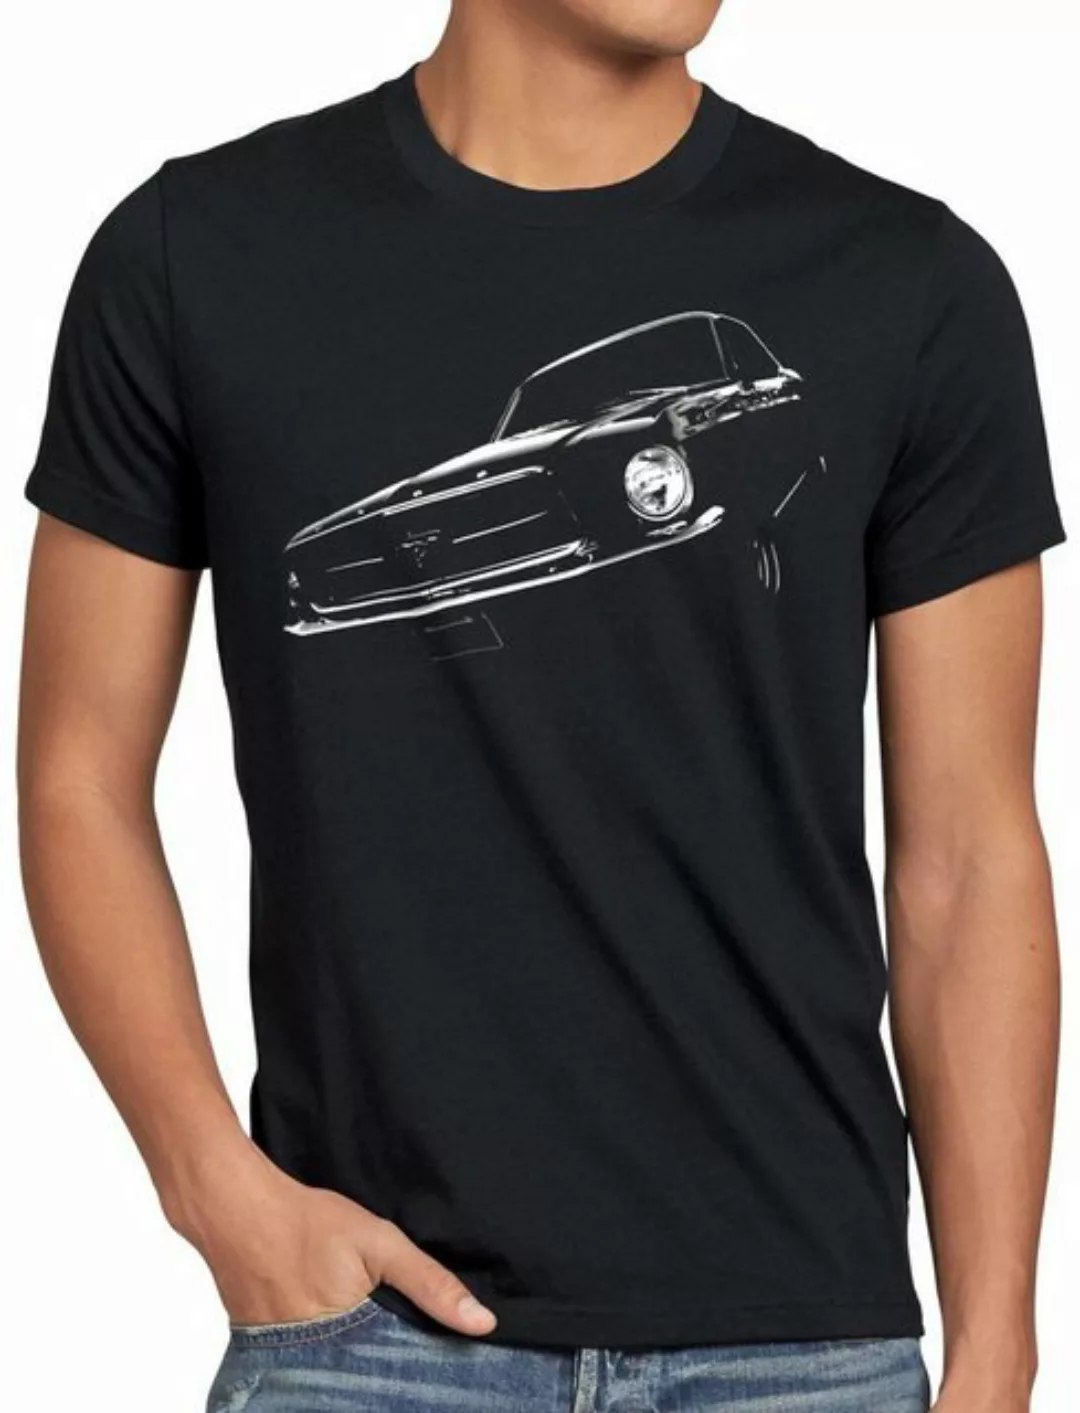 style3 Print-Shirt Herren T-Shirt Classic Pony Car muscle mustang günstig online kaufen